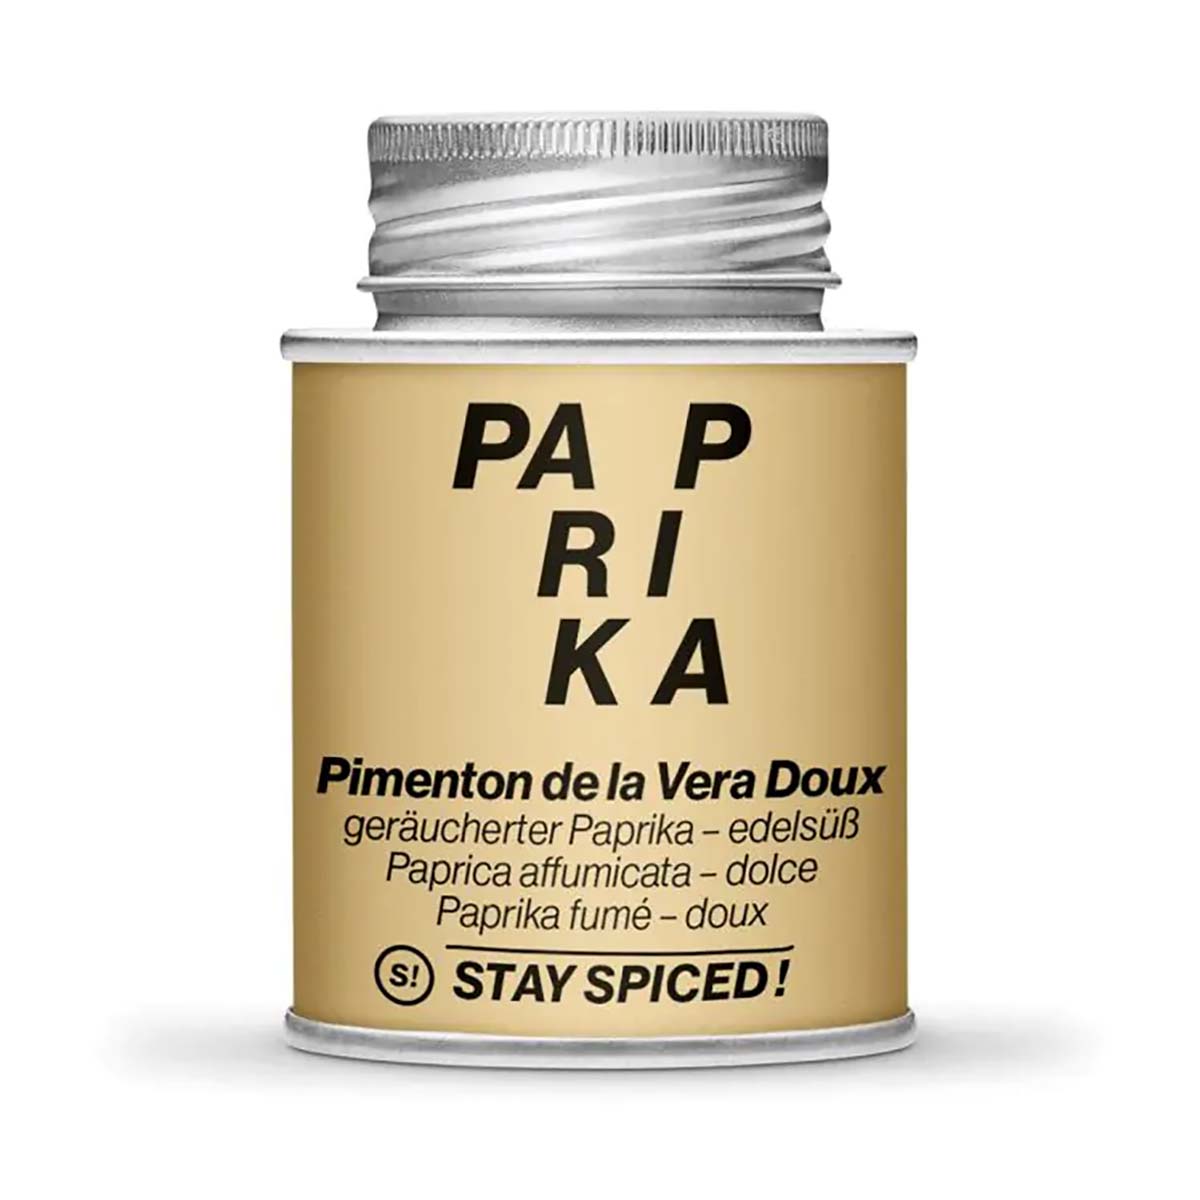 STAY SPICED ! Pimenton de la Vera Doux - Paprika geräuchert |  80 g